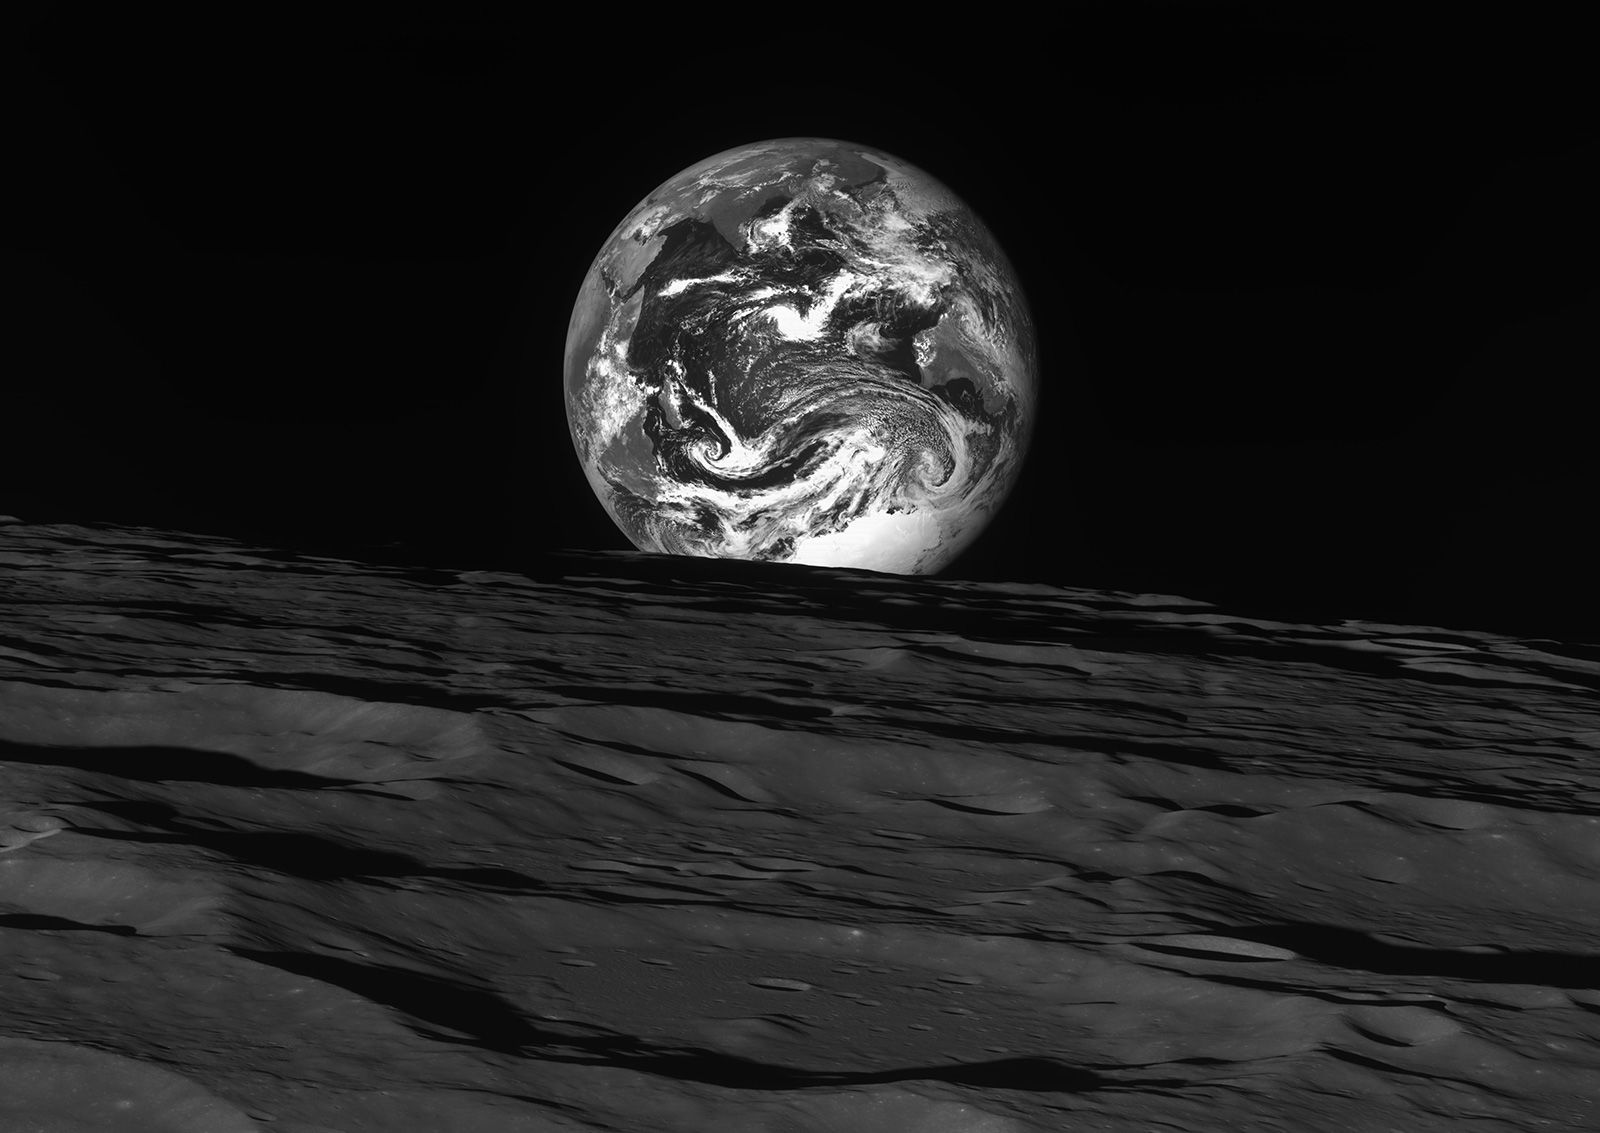 South Korea's moon probe captures stunning Earth, moon images | CNN